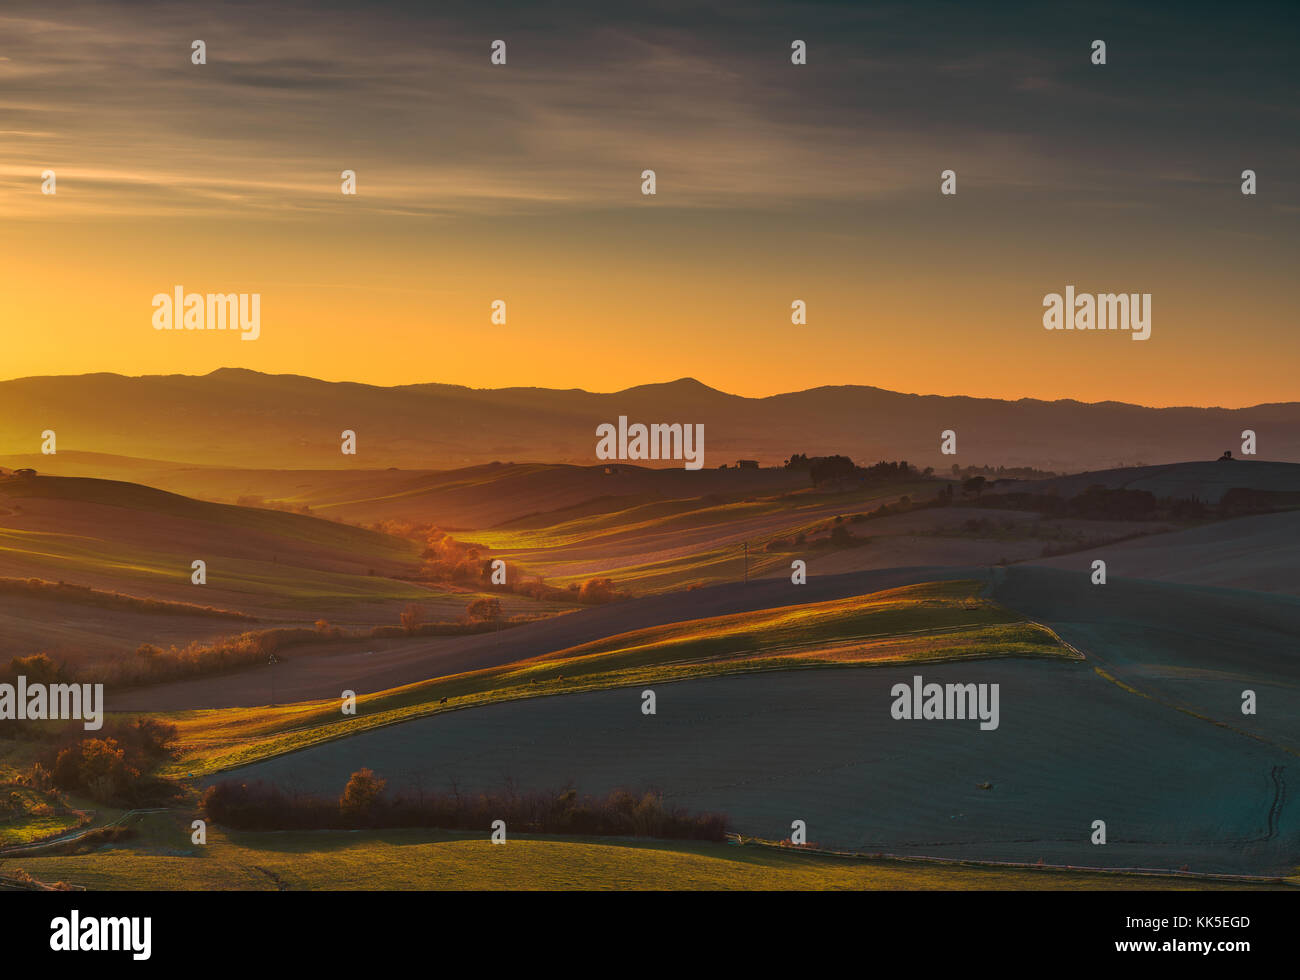 Maremma, ländlichen Panoramablick Sonnenuntergang Landschaft. Wiesen und Felder. Toskana, Italien, Europa. Stockfoto